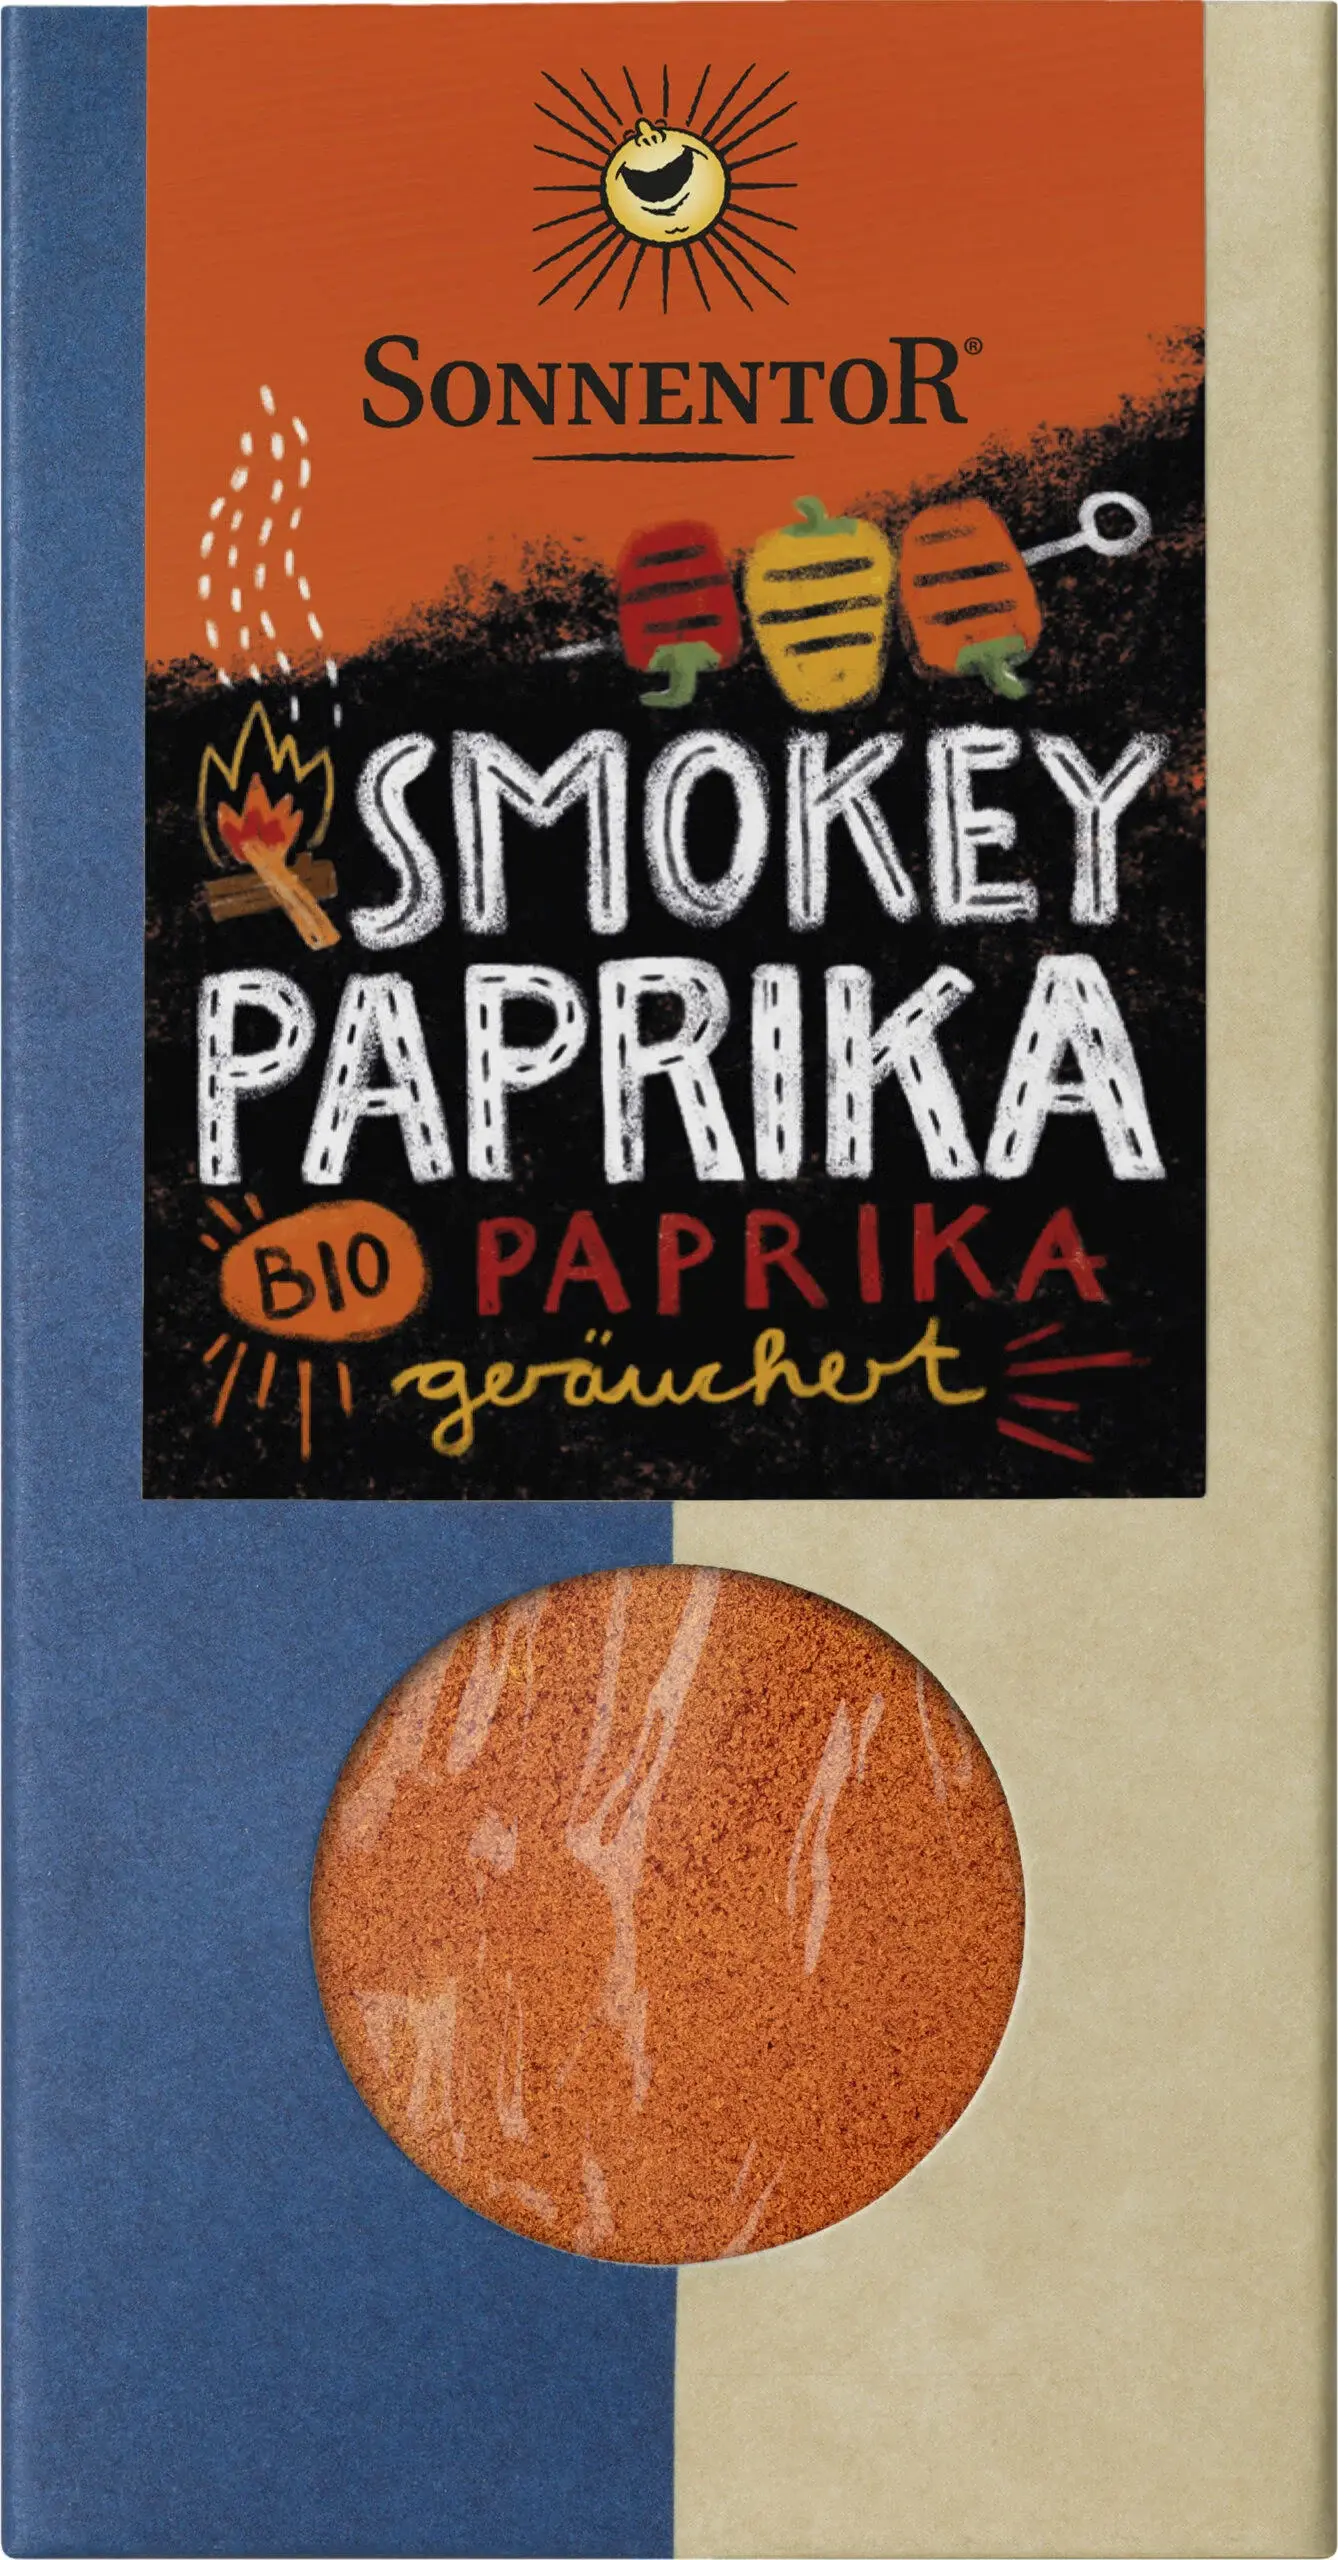 Sonnentor Smokey Paprika Bbq (50 gr)